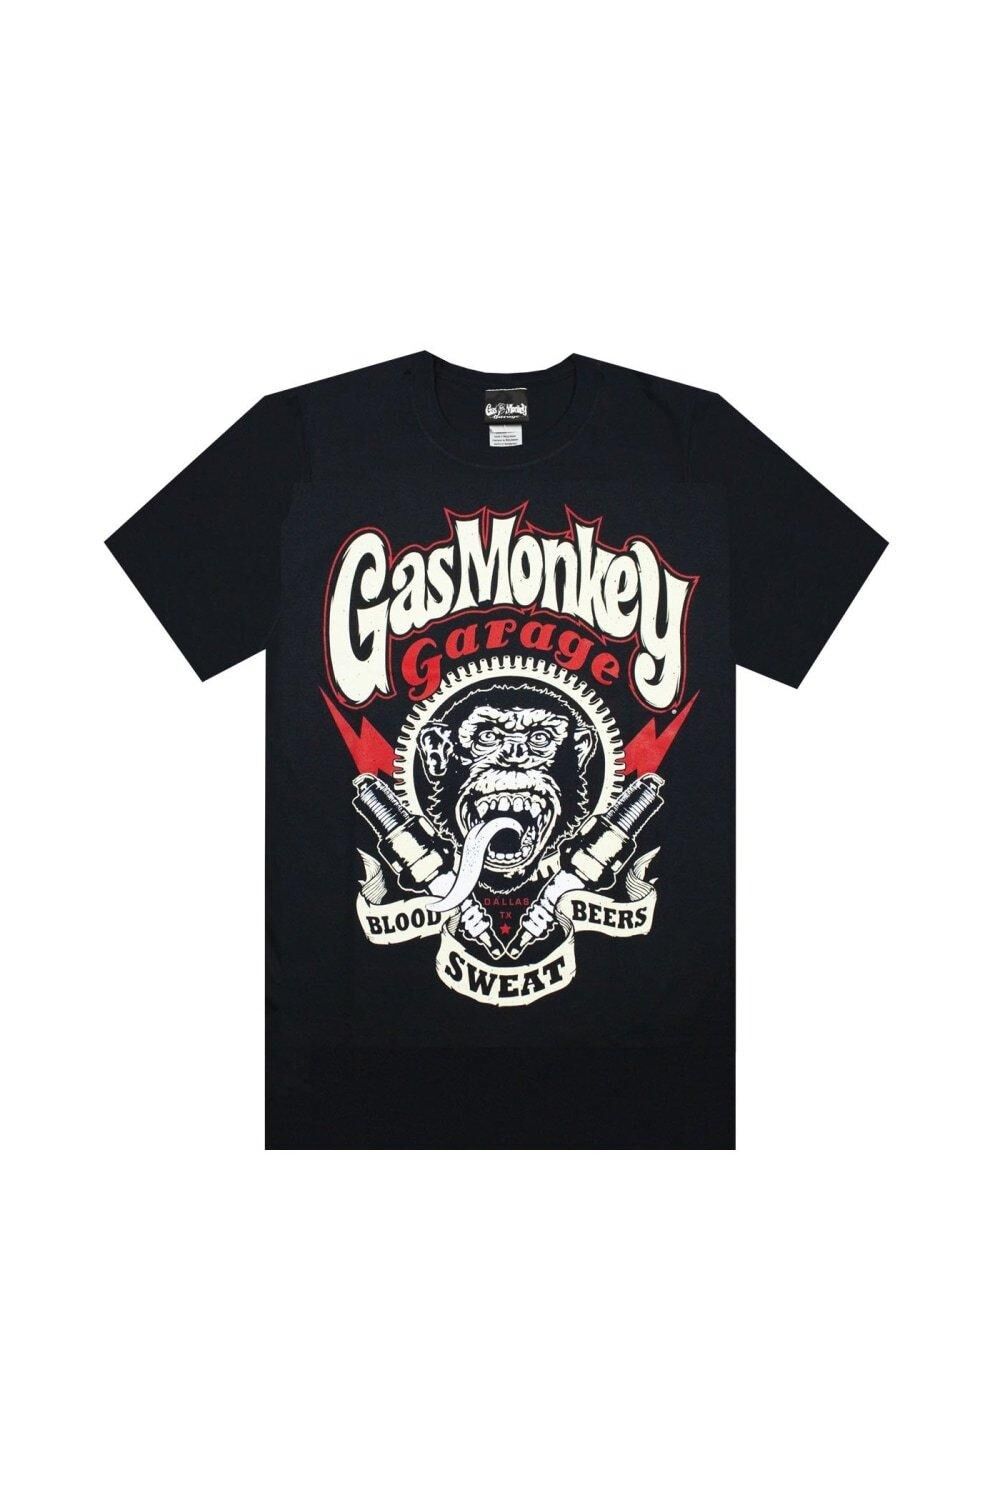 Gas Monkey Garage Sparkplugs T-Shirt